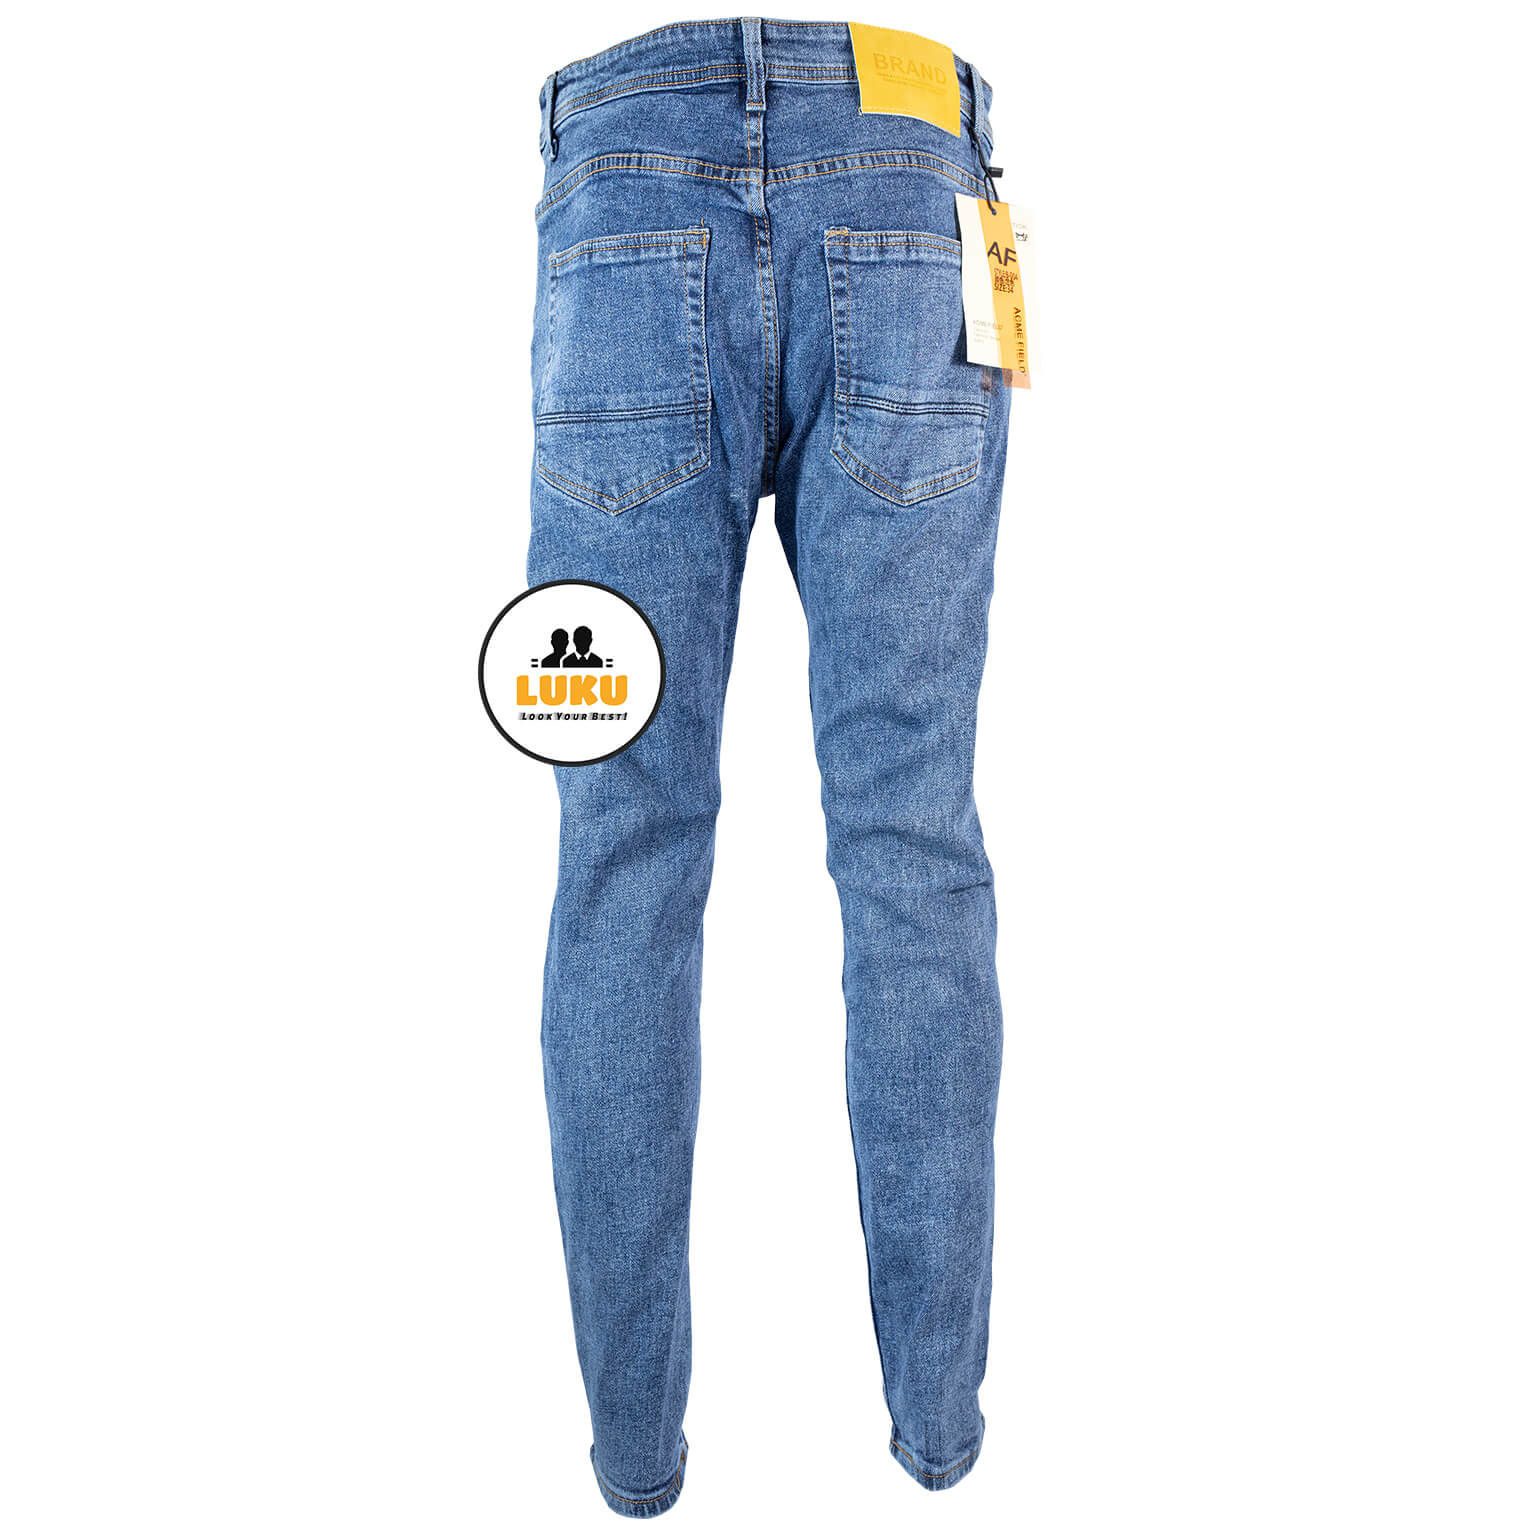 Faded blue men jeans kenya price online